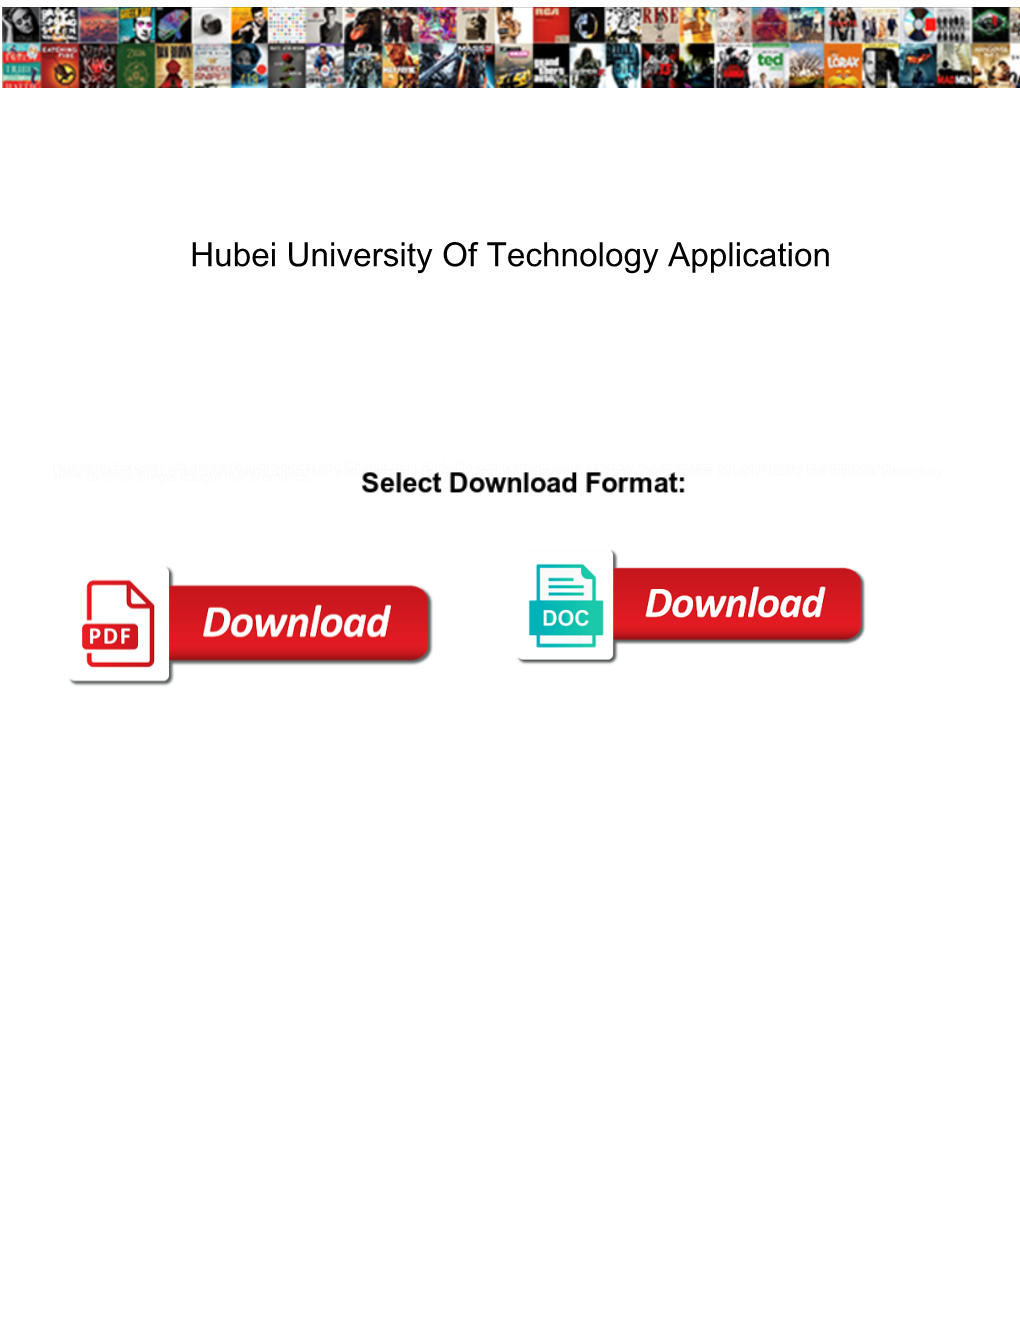 Hubei University of Technology Application